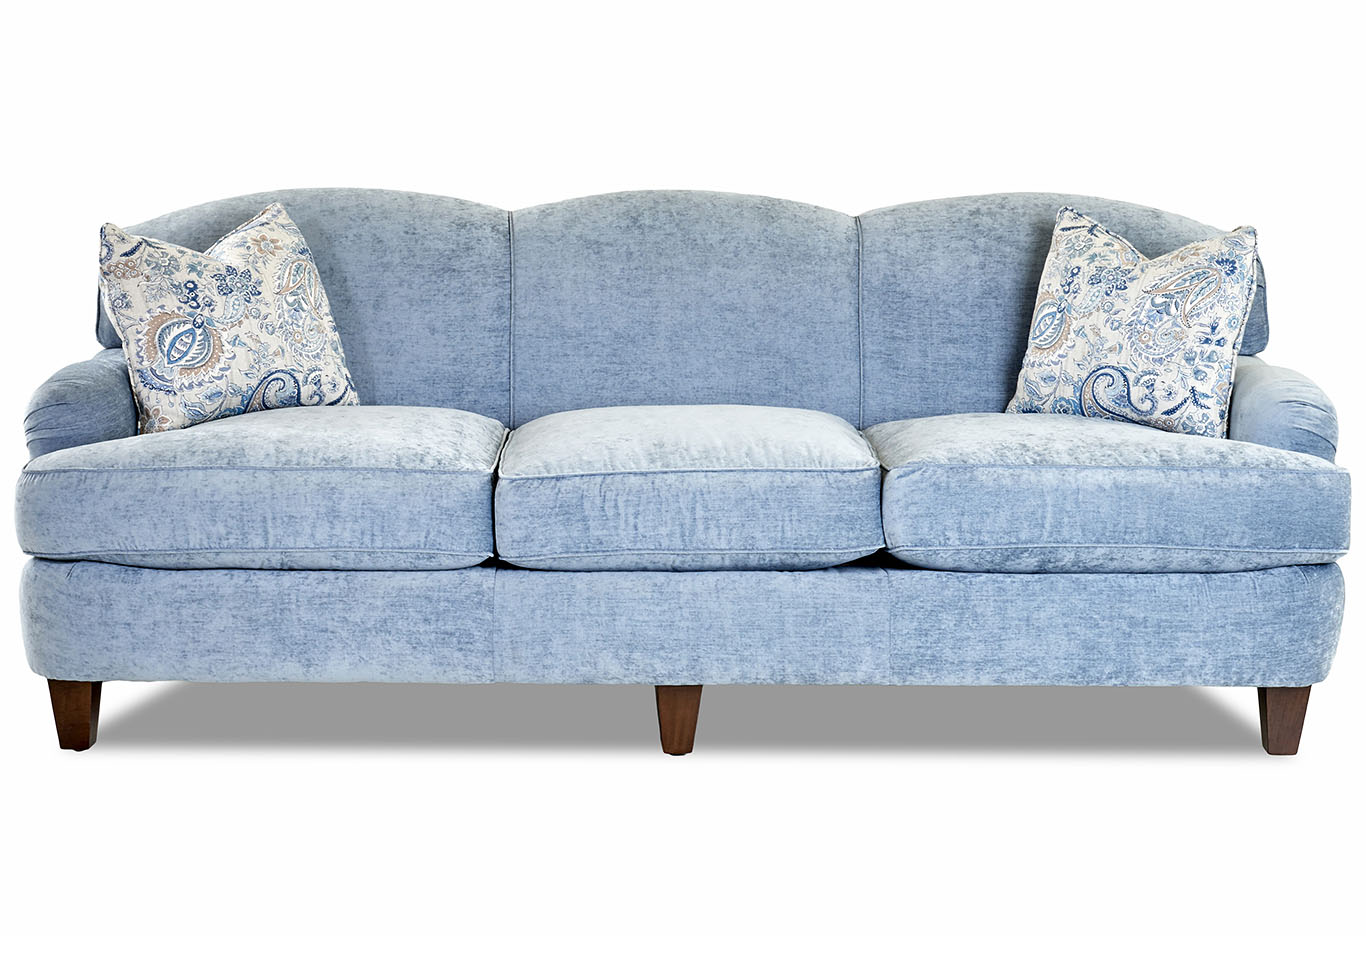 Albion Evyn Sky Stationary Fabric Sofa,Klaussner Home Furnishings